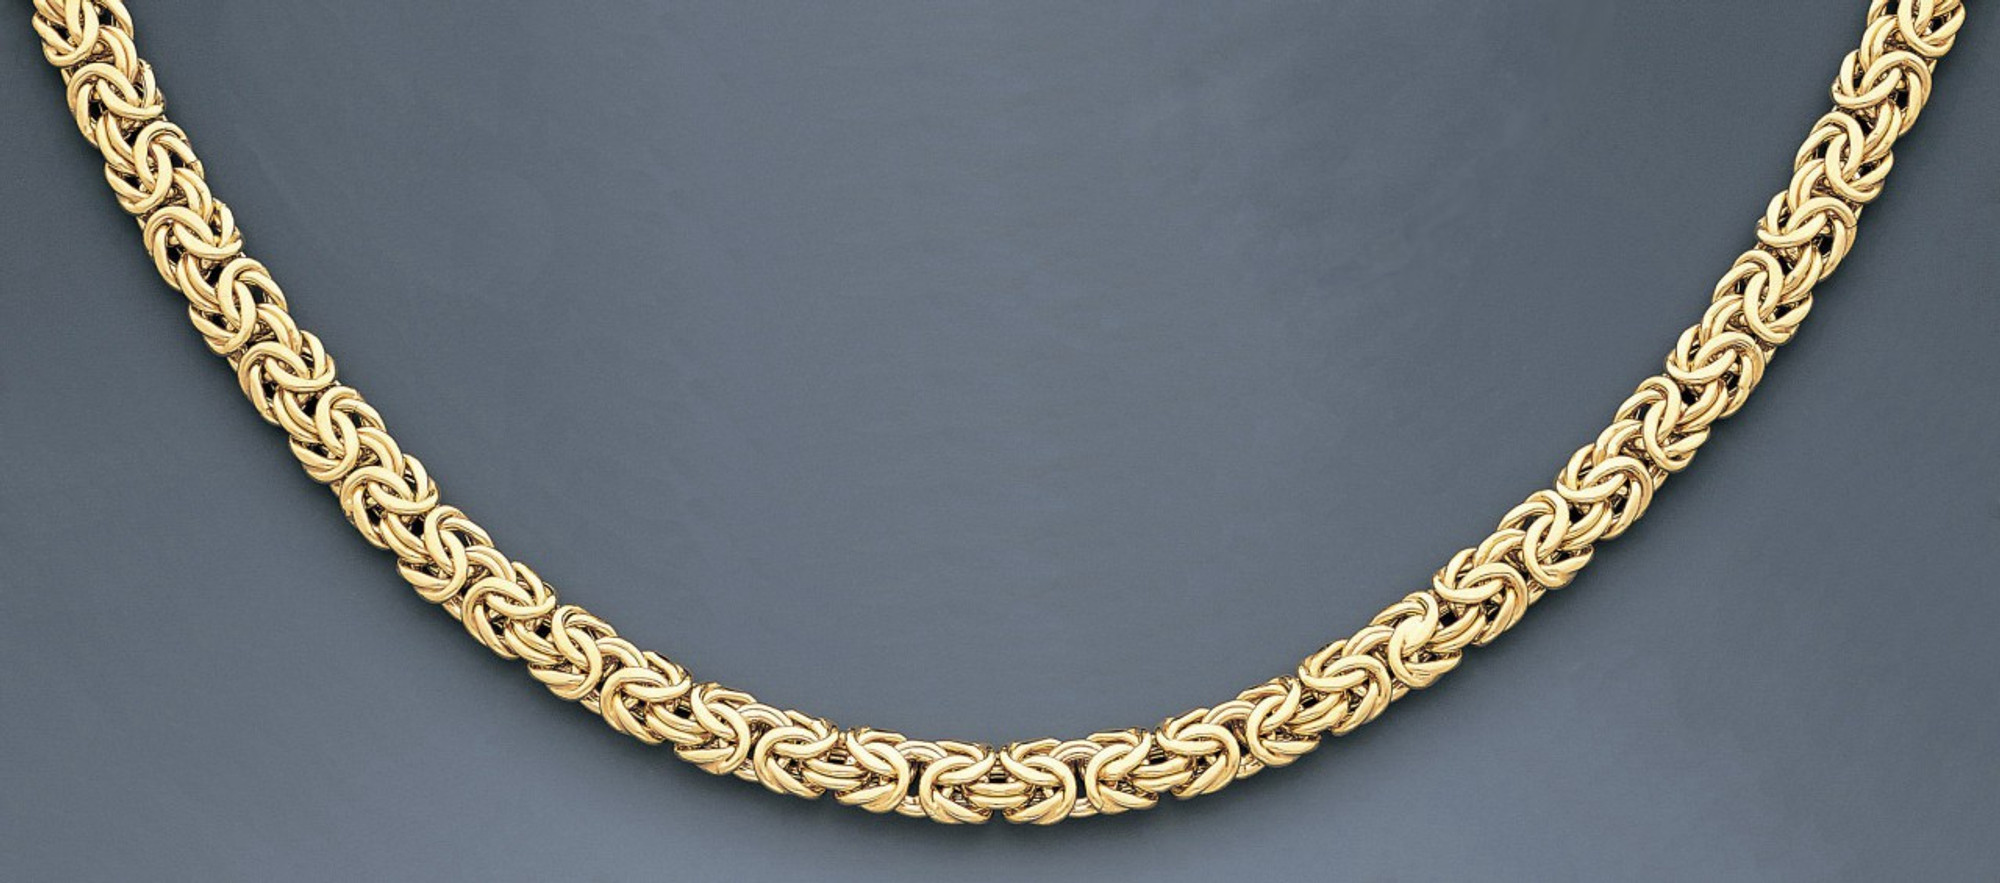 18 Byzantine Necklace in Italian Sterling Silver (7.5 mm)